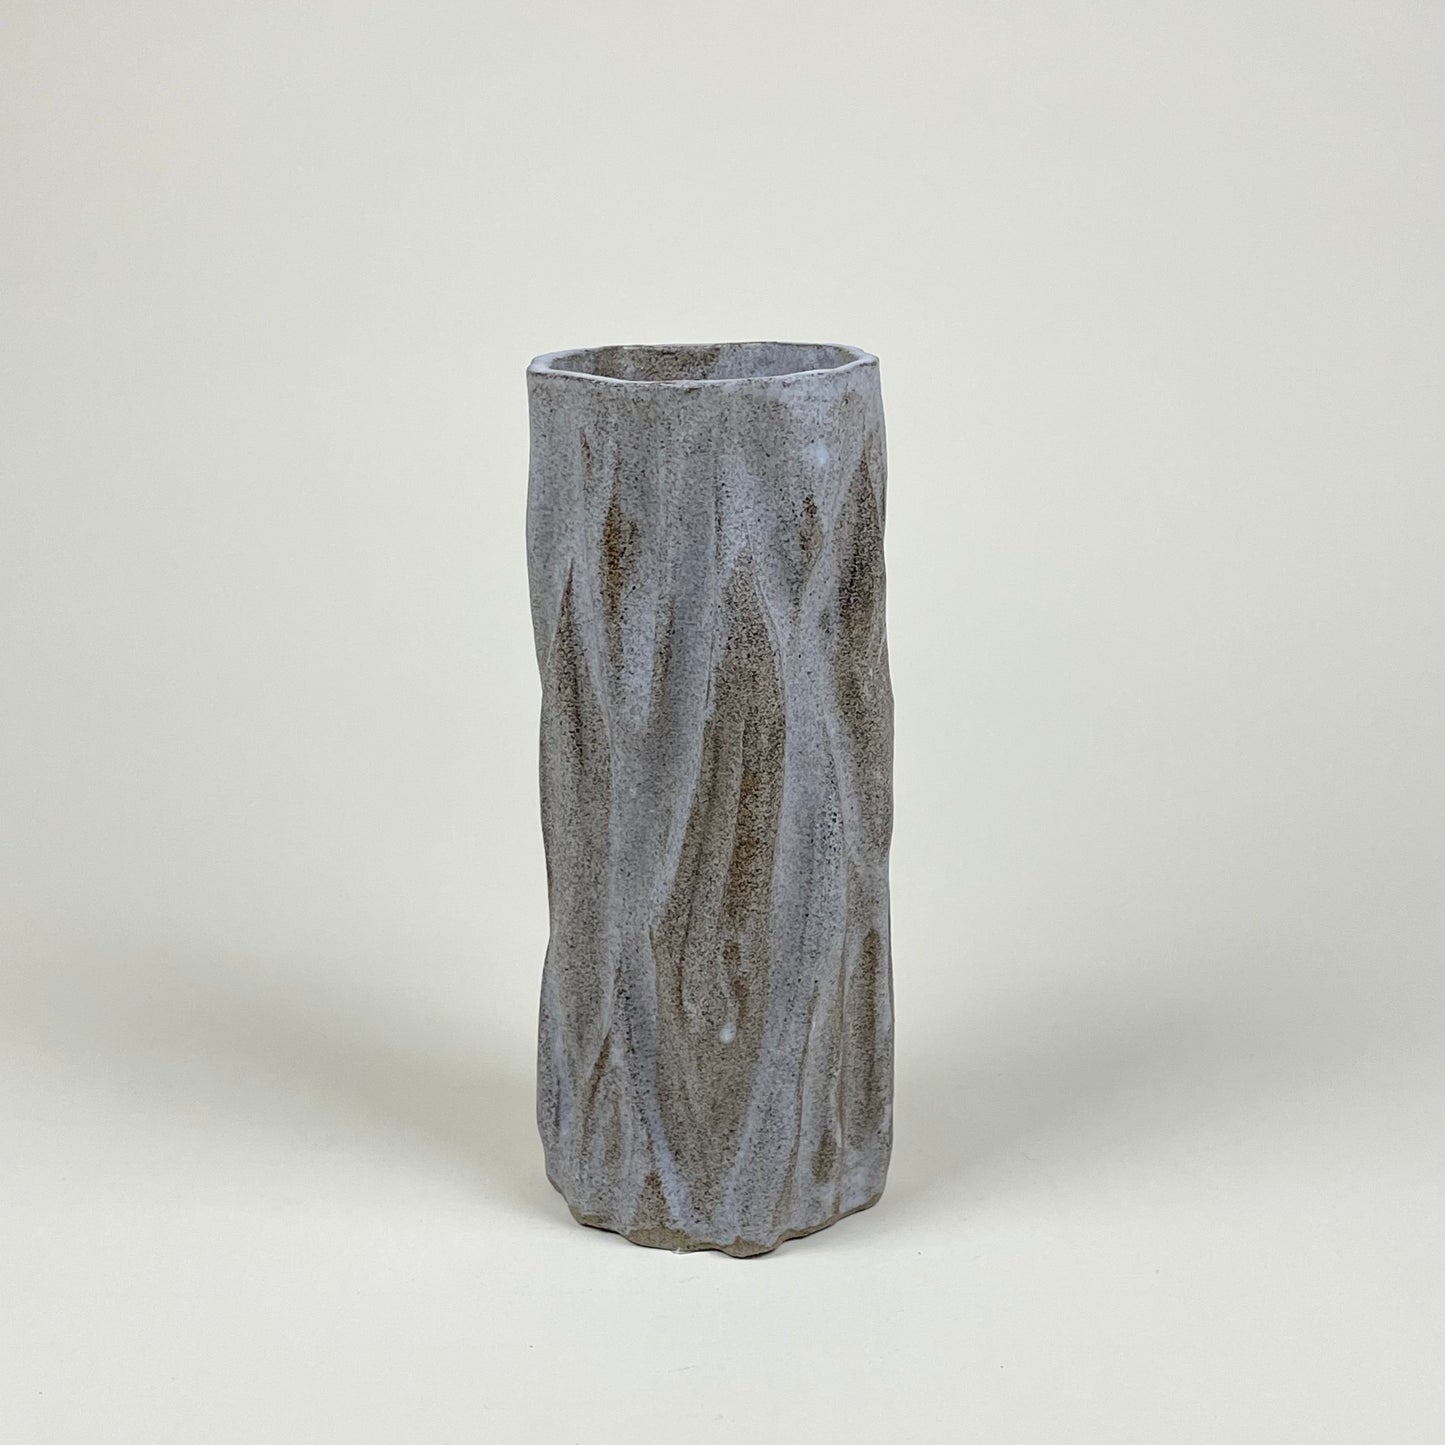 Ceramic vase by Astrid Öhman